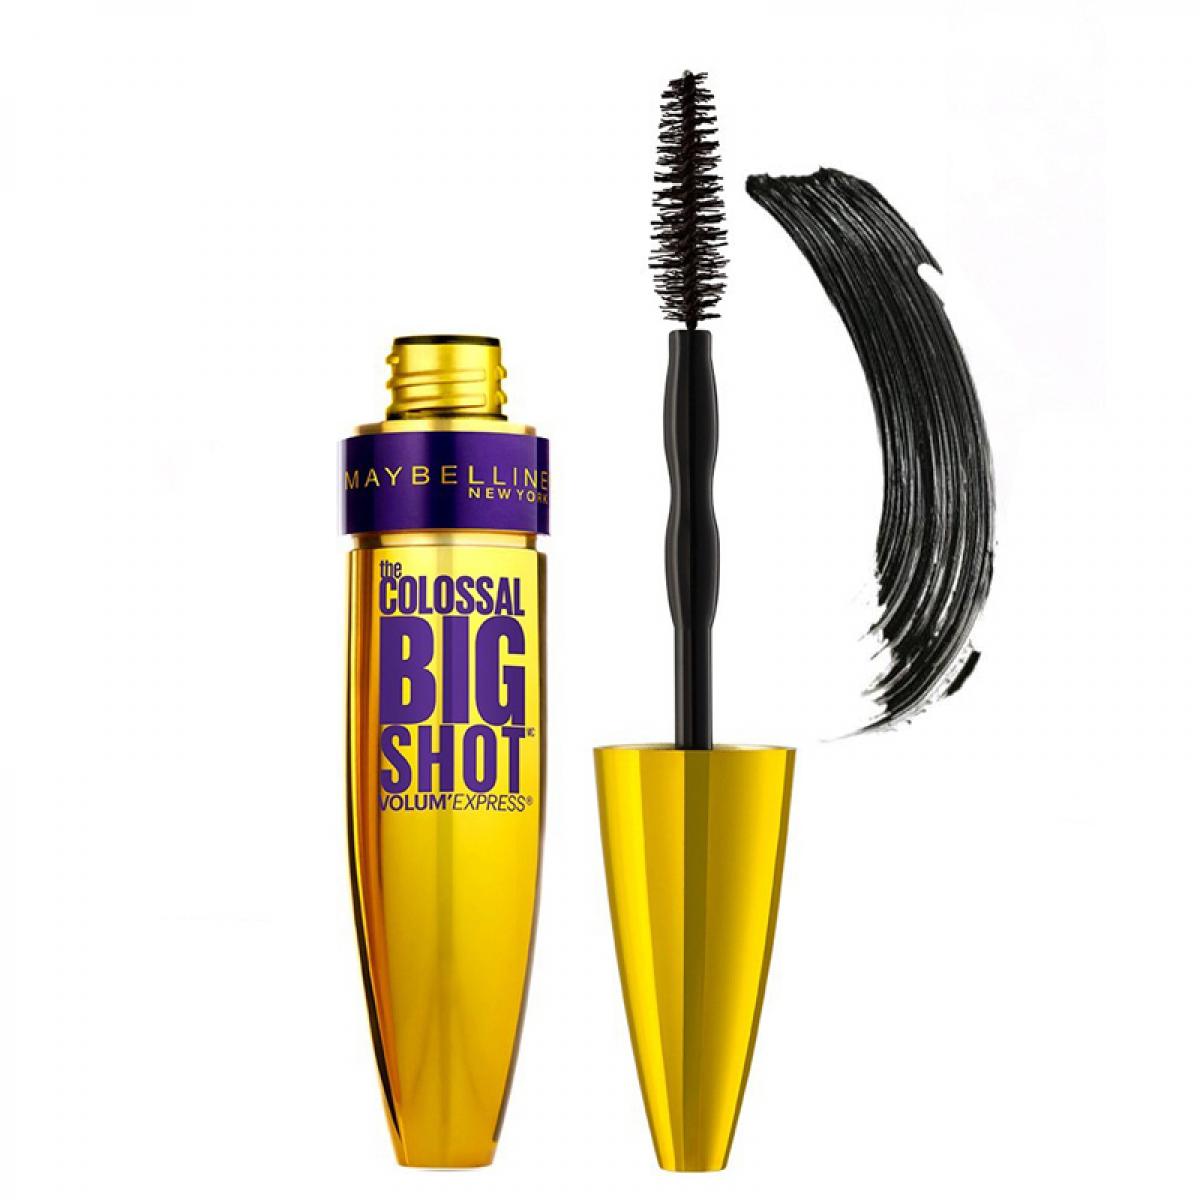  ریمل حجم دهنده مدل Colossal Big Shot - Maybelline Colossal Big Shot Mascara